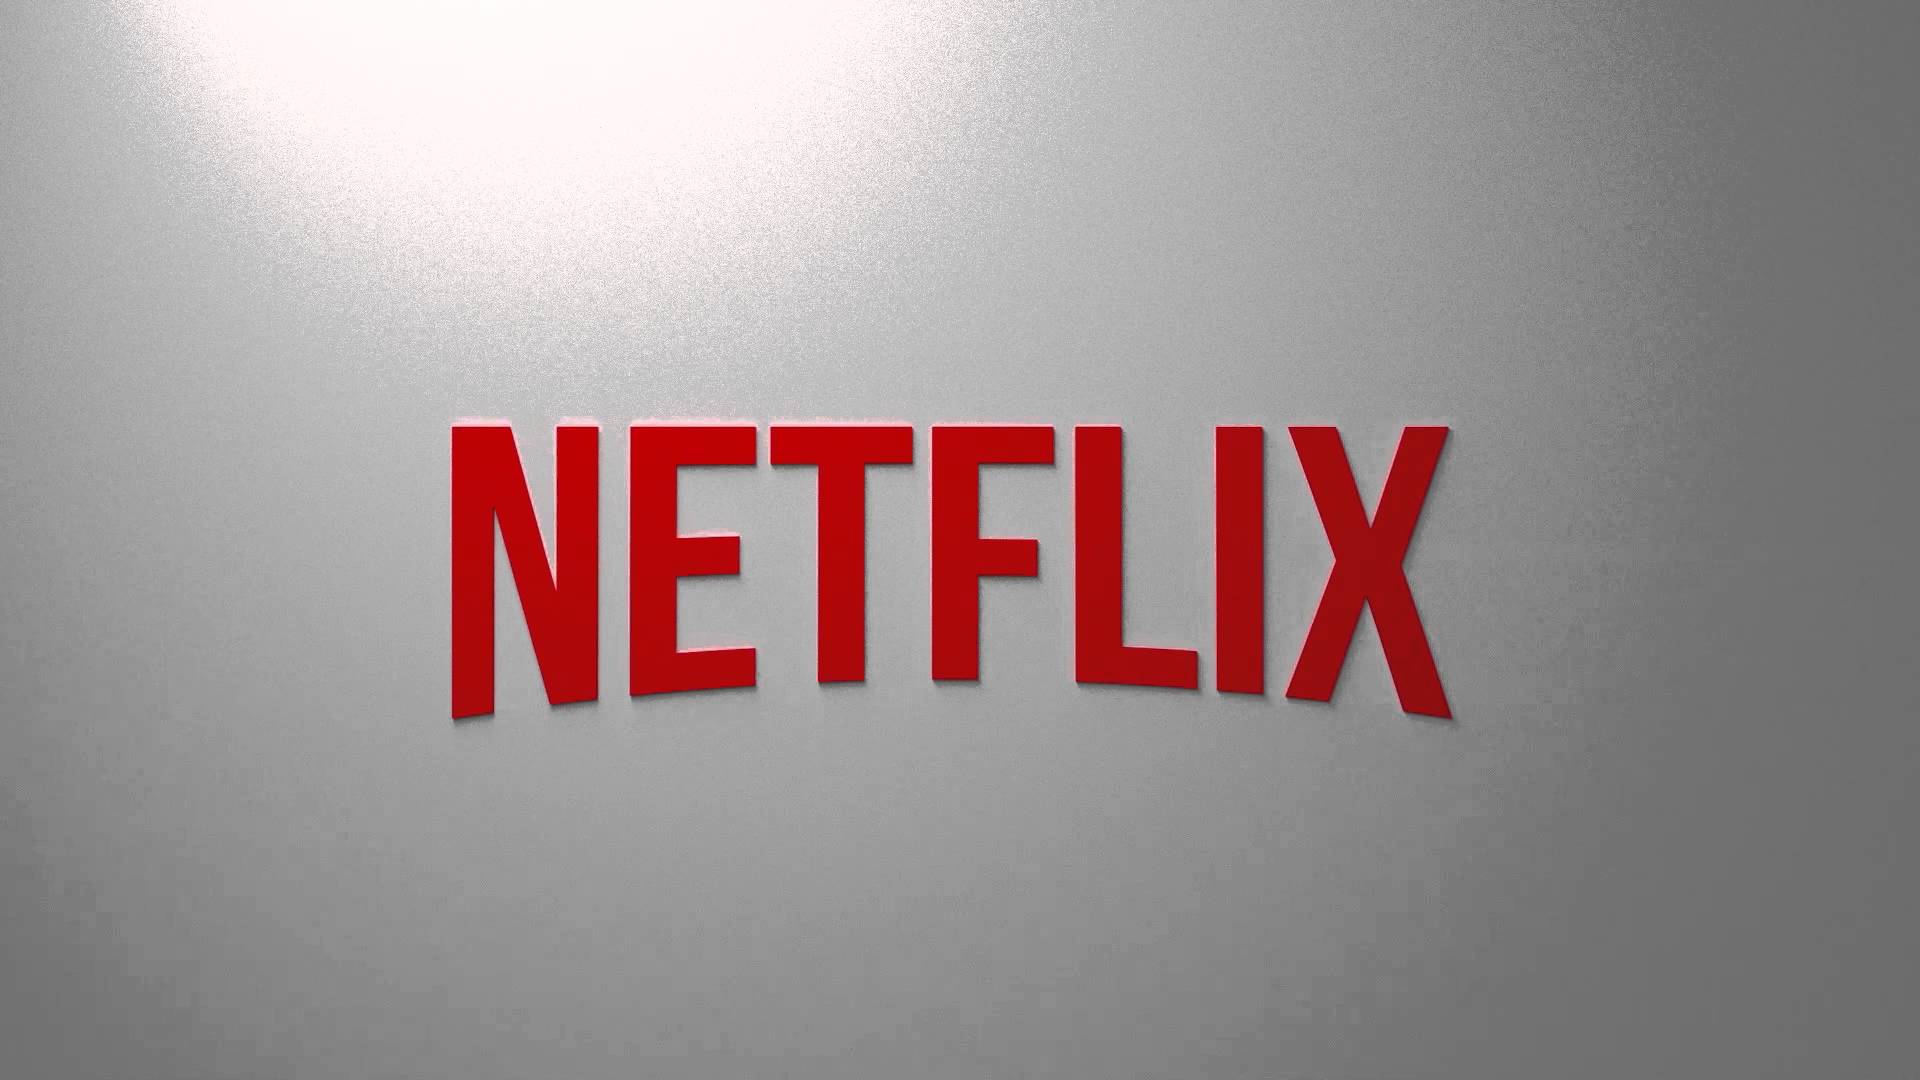 L'emergenza Coronavirus non sarà un bene per Netflix